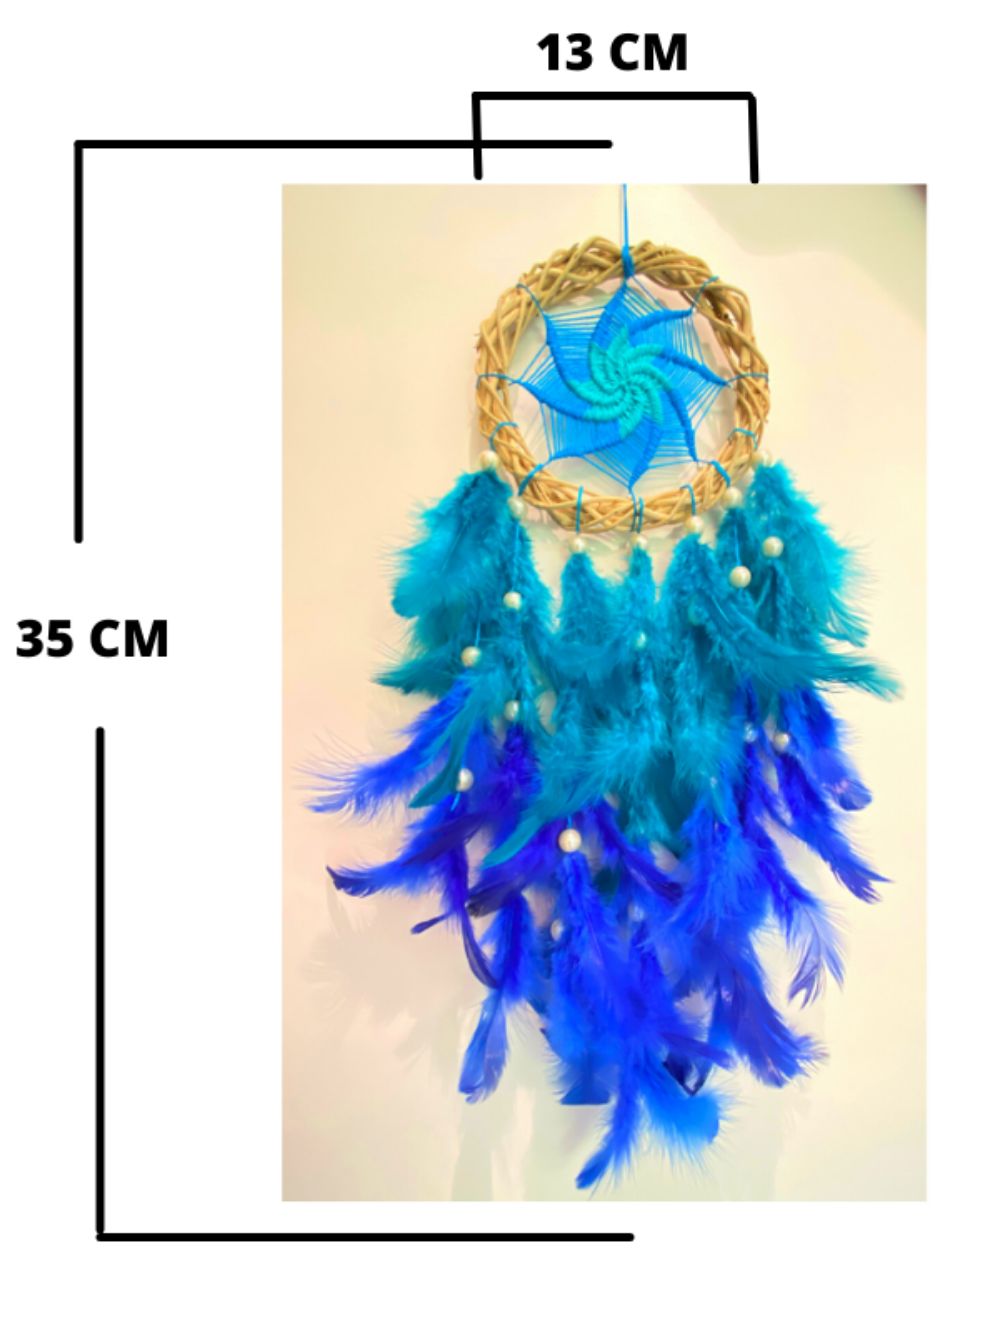 Peacock Magic Wreath Dream Catcher with Pretty Lights